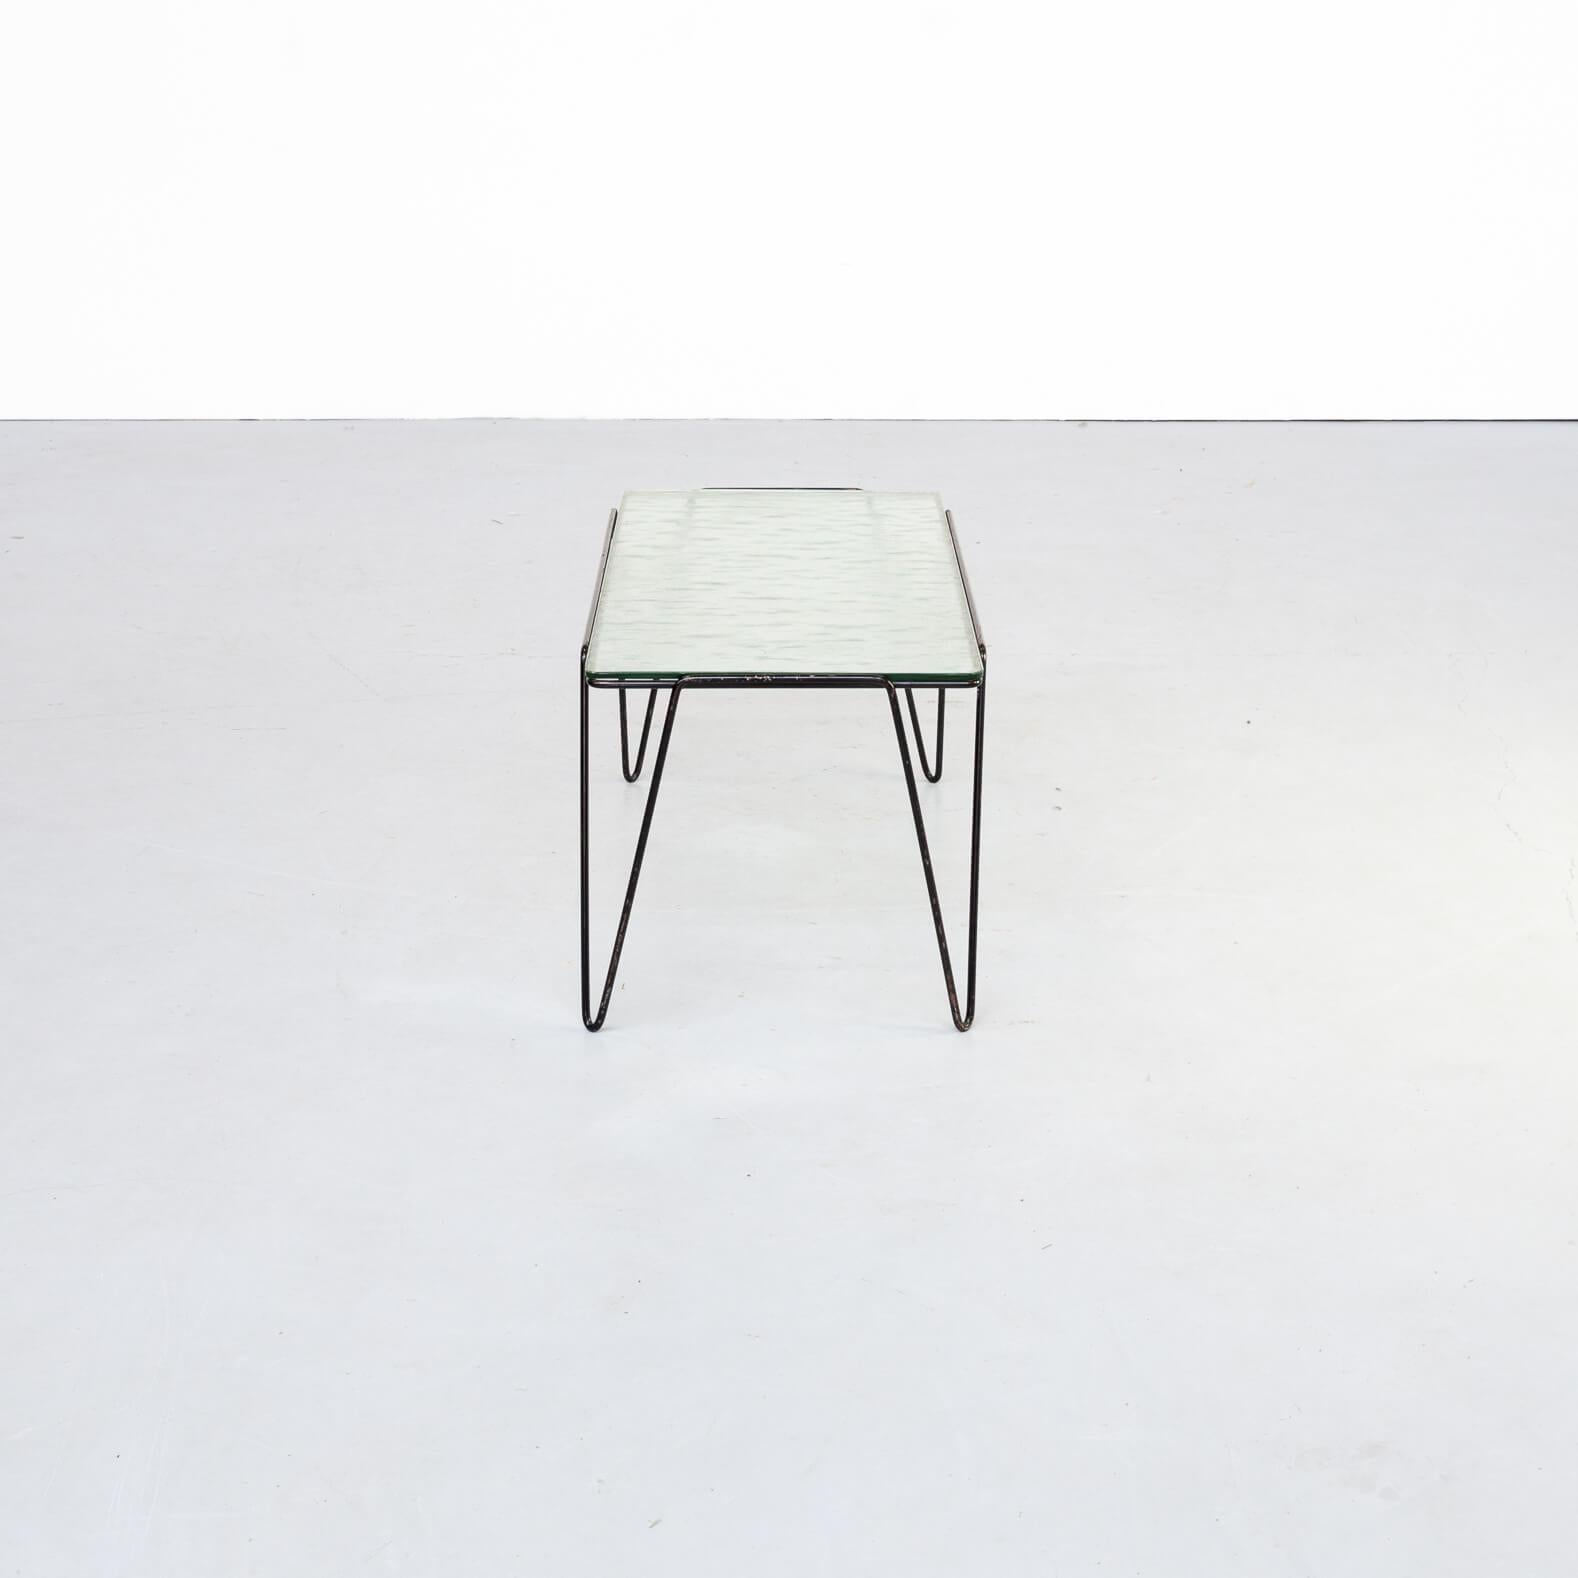 Coffee table designed by Arnold Bueno de Mesquita for Dutch Spurs Goed Wonen Meubelen in 1955. Original glass!